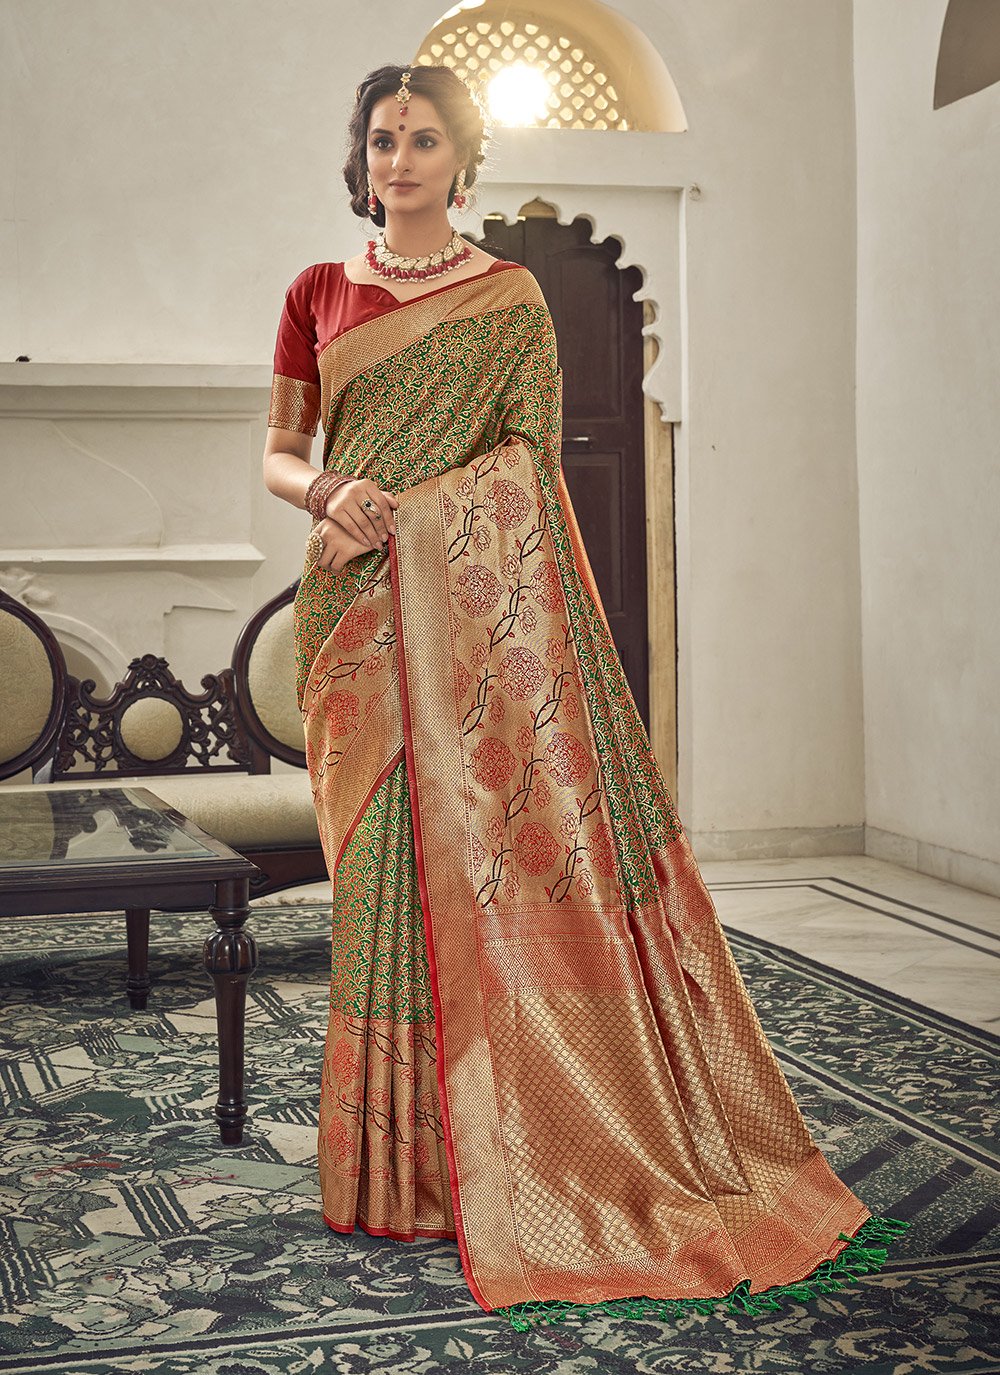 Banarasi Silk Traditional Designer Saree in Green